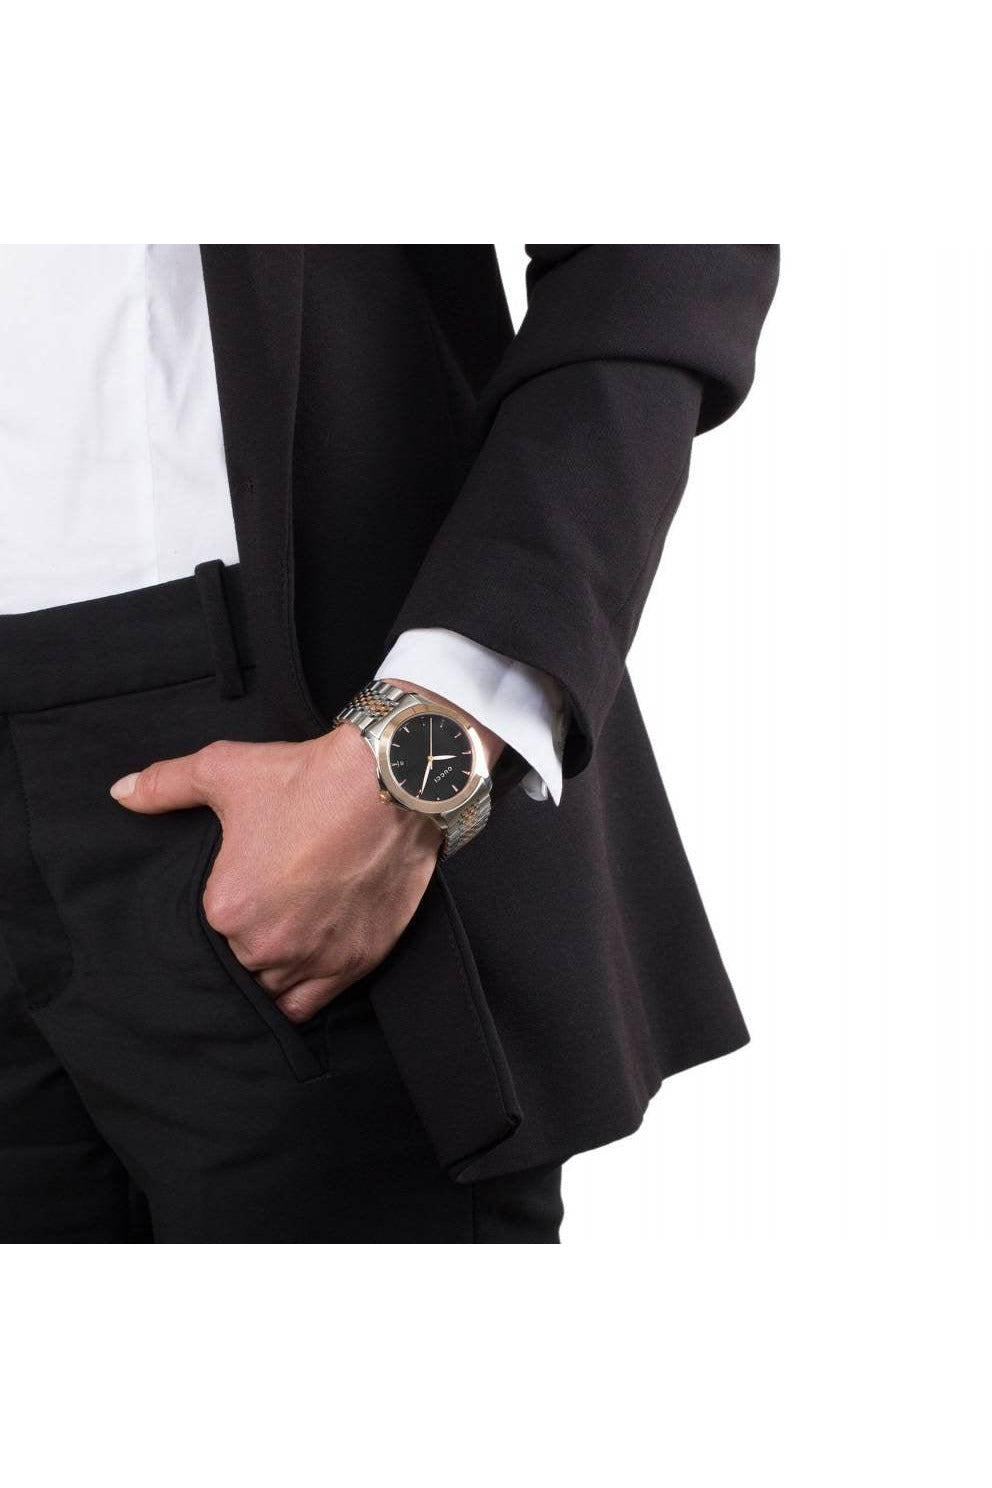 Buy Gucci Men's Swiss Made Quartz Stainless Steel Black Dial 38mm Watch YA126410 in Pakistan